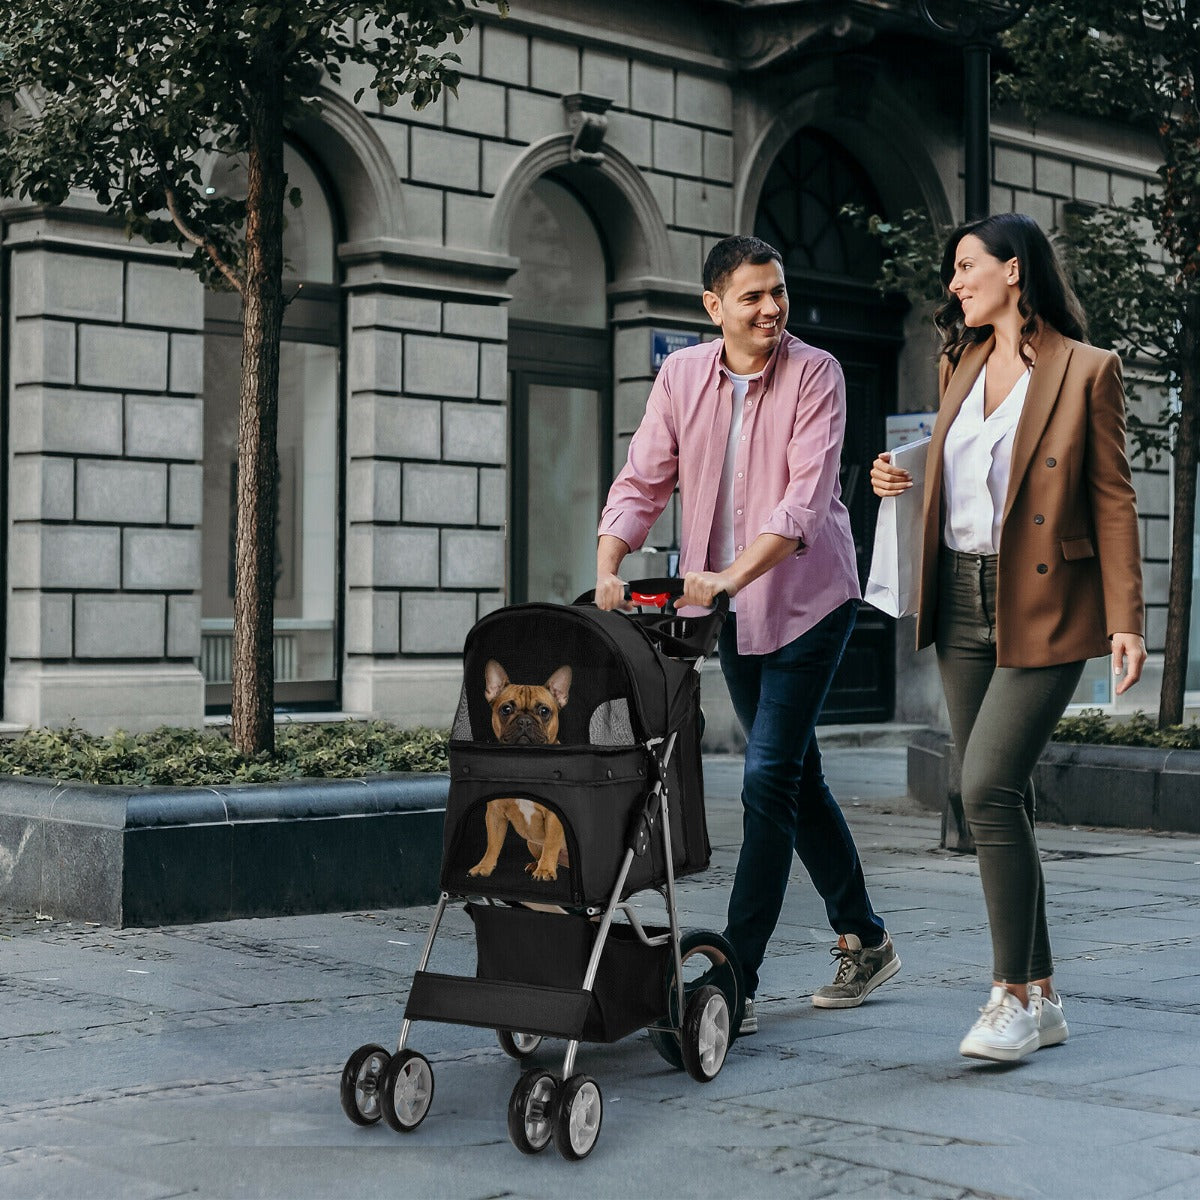 4-Wheel Folding Pet Stroller with Storage Basket and Adjustable Canopy-Black